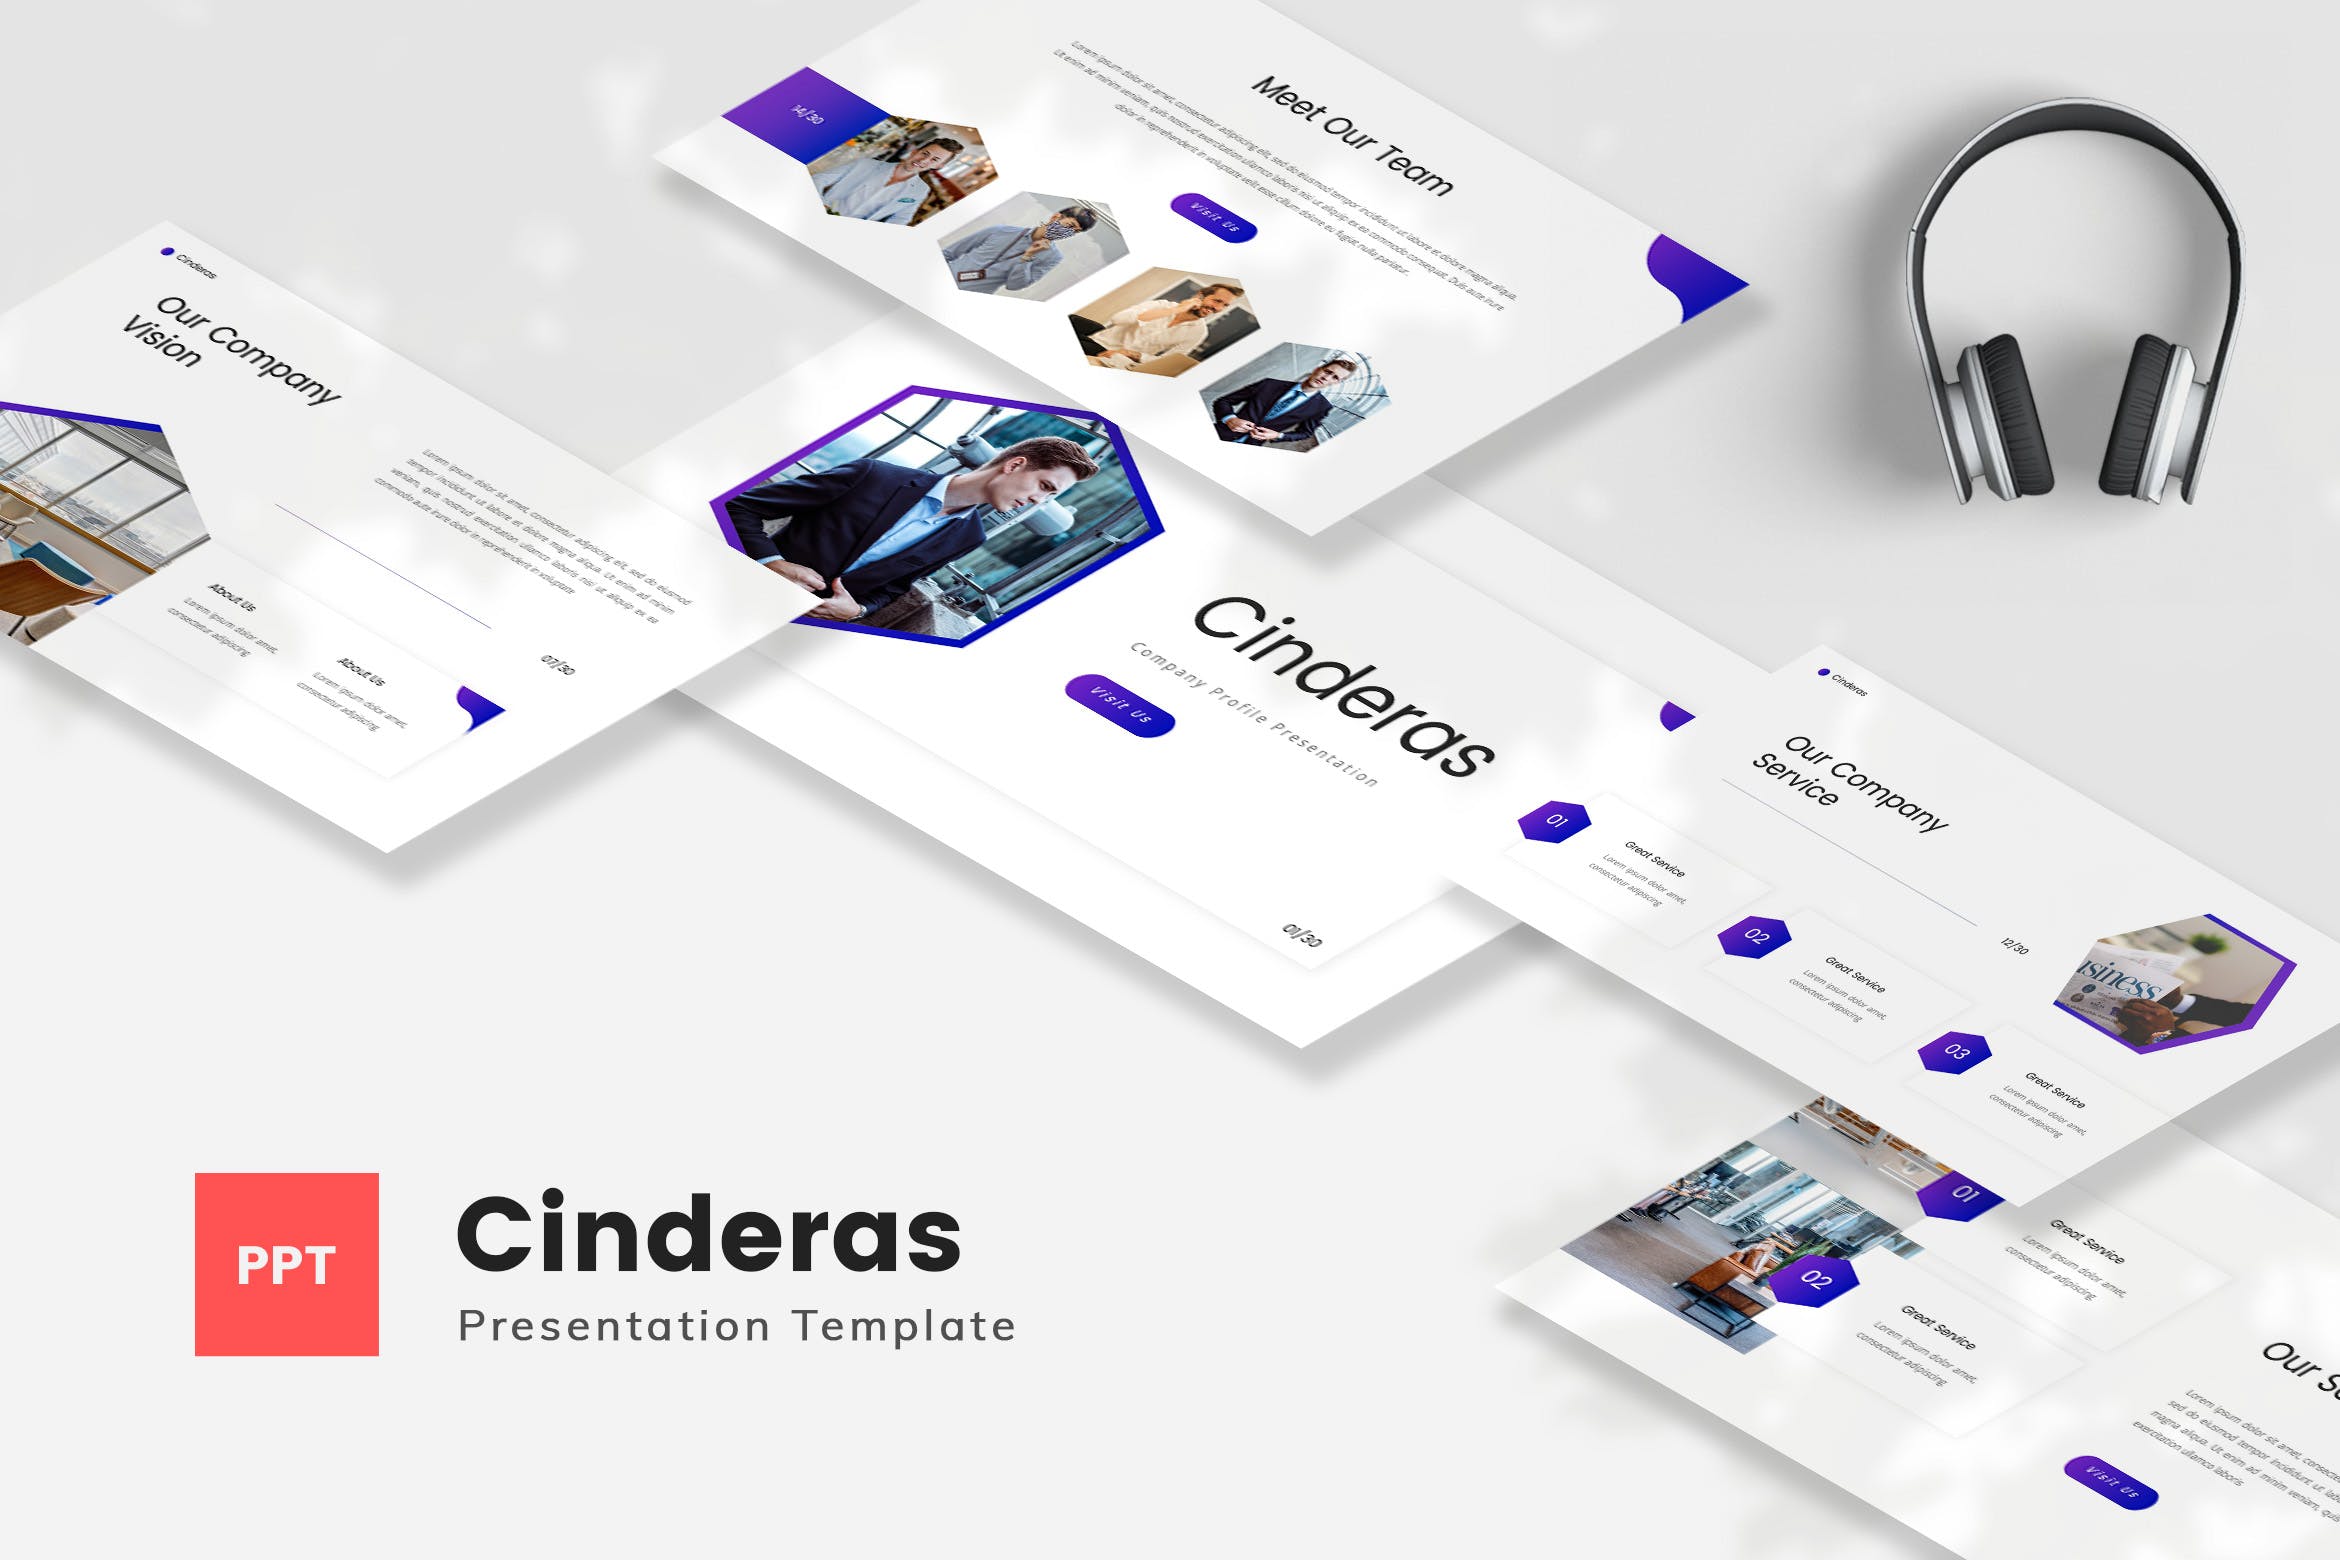 企业公司简介PPT设计模板 Cinderas – Company Profile PowerPoint Template 幻灯图表 第1张